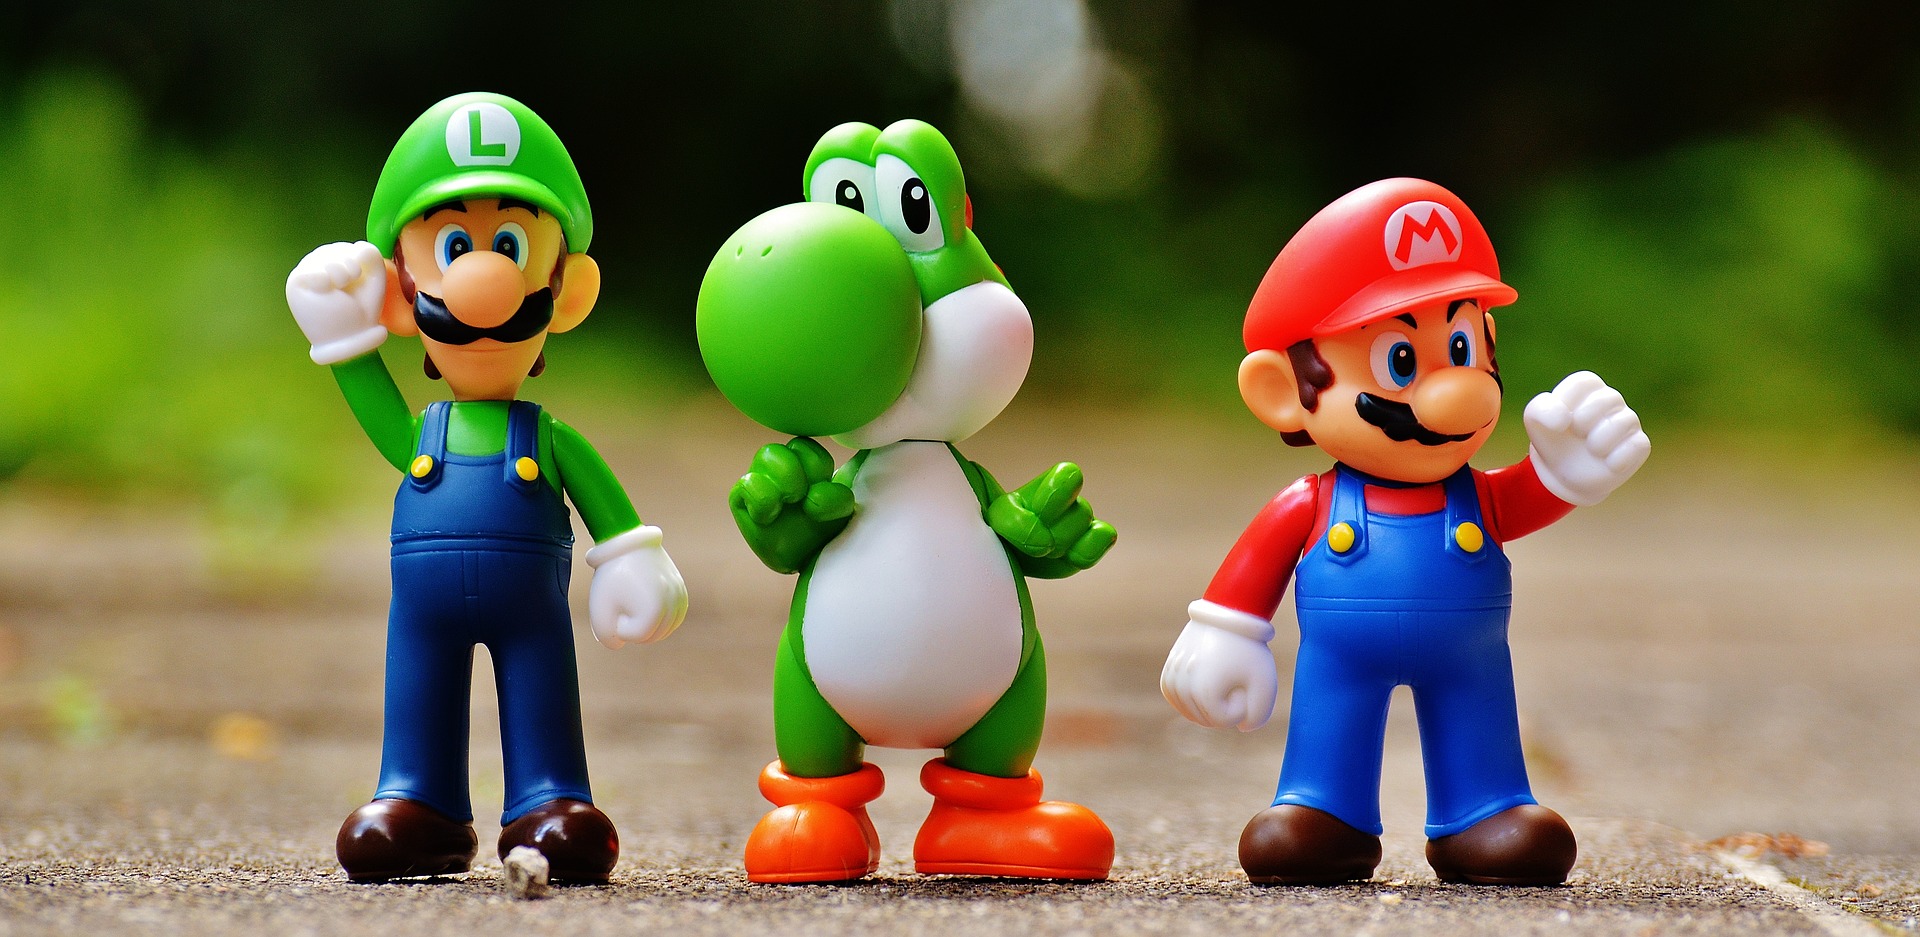 Mario, Luigi, and Yoshi together.